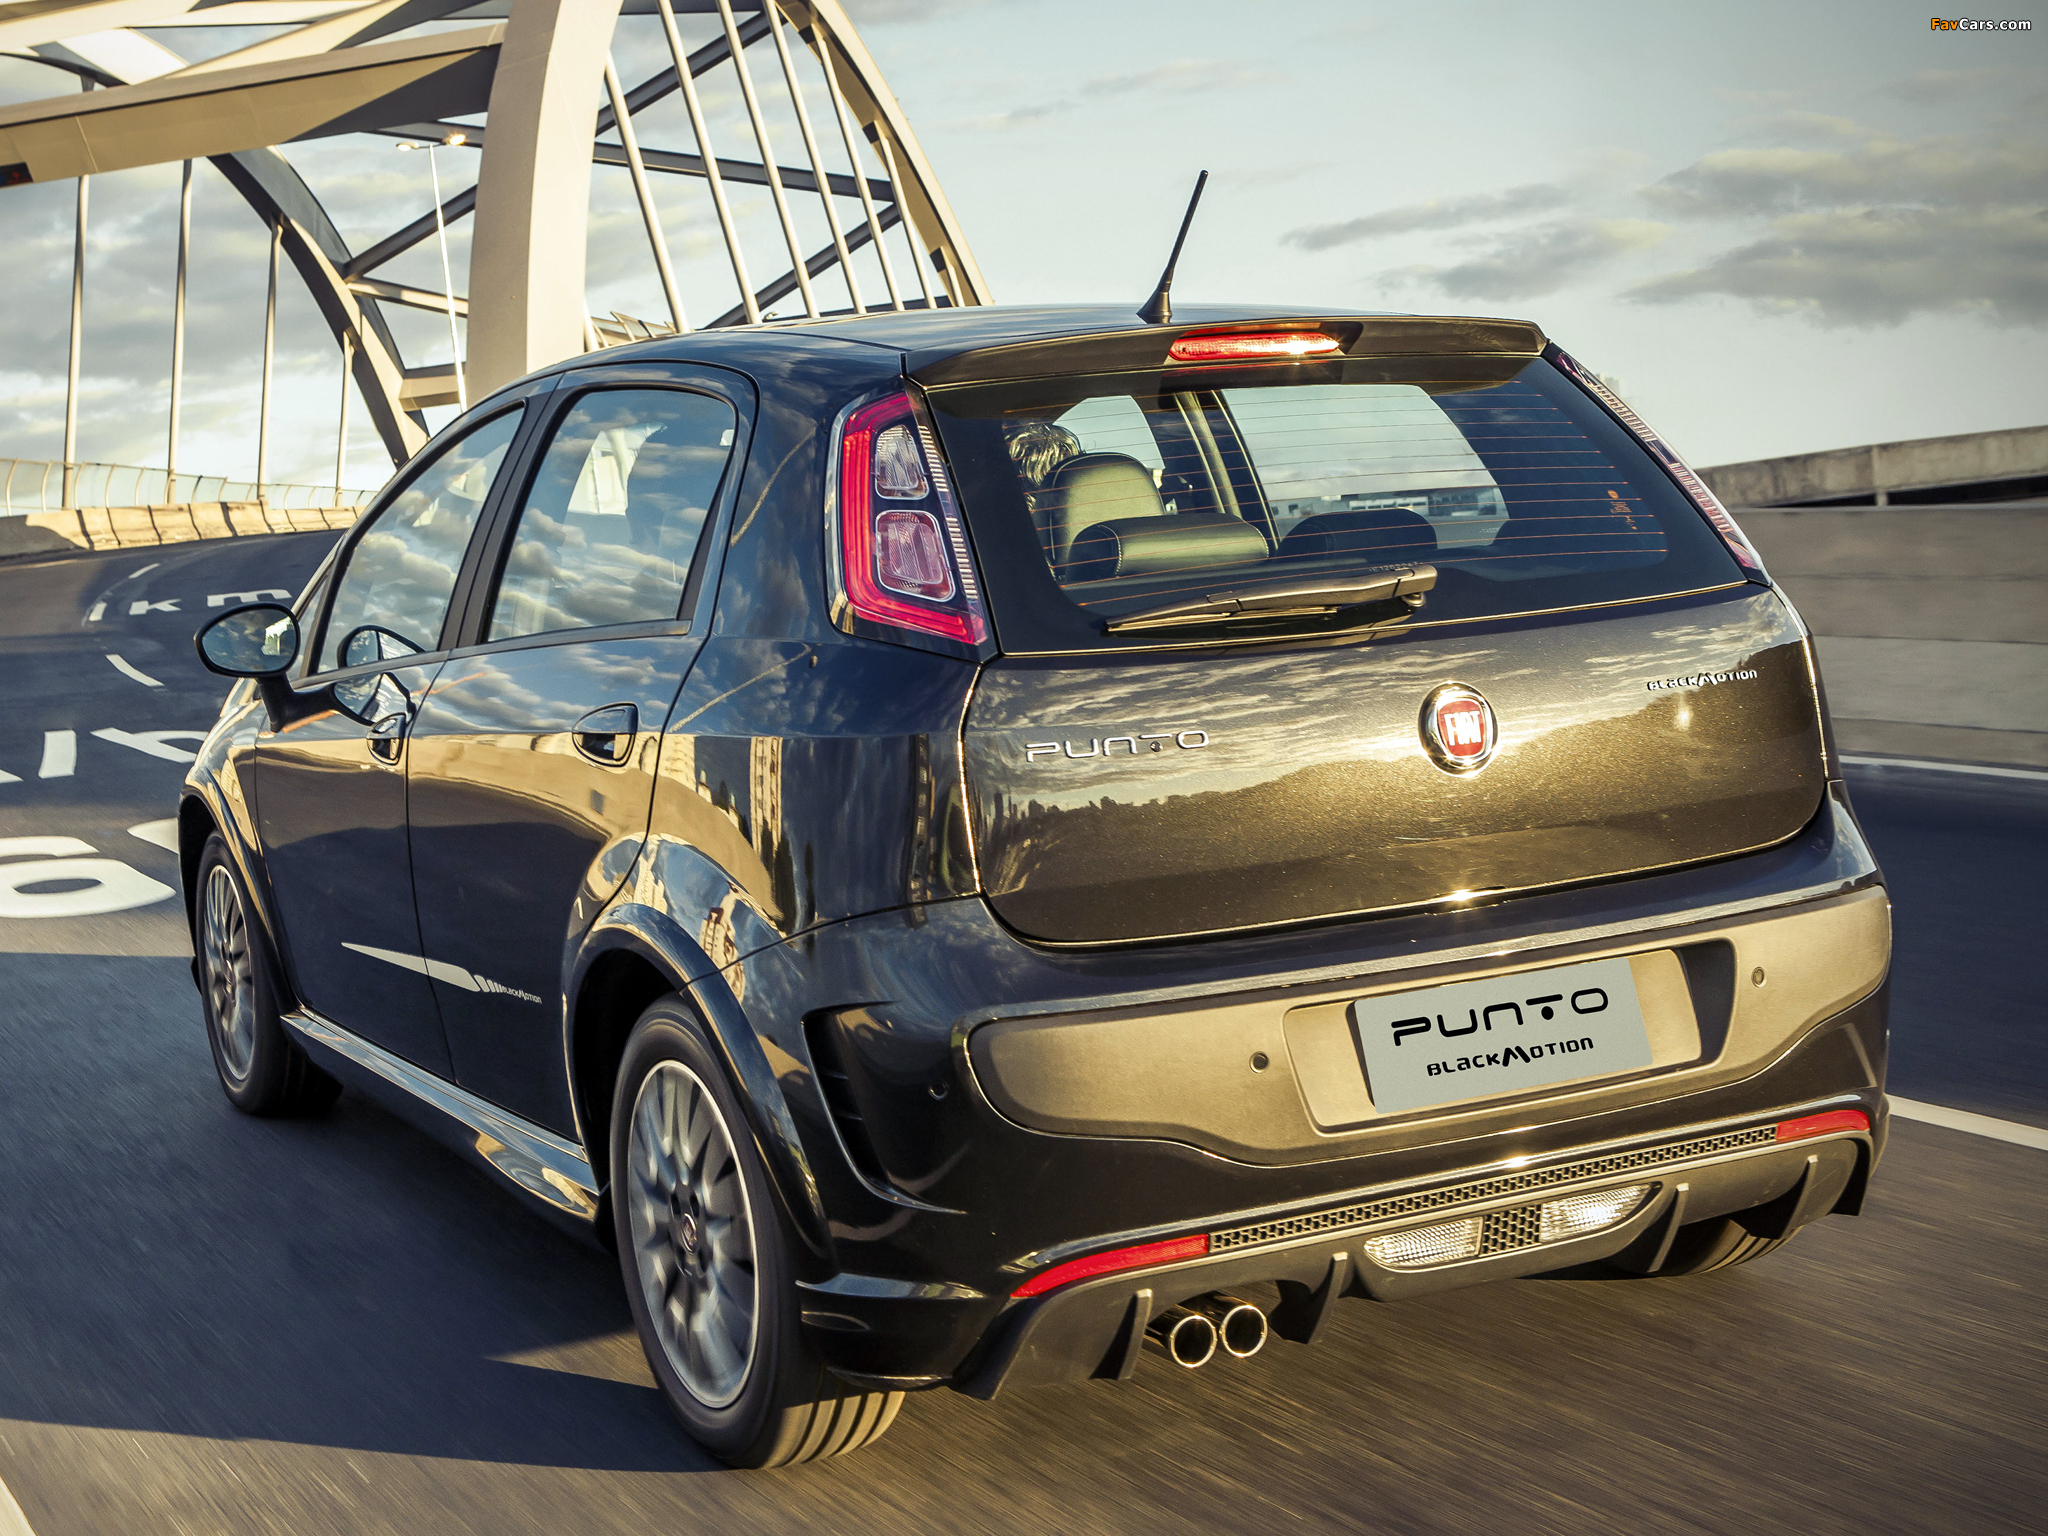 Fiat Punto BlackMotion (310) 2013 images (2048 x 1536)